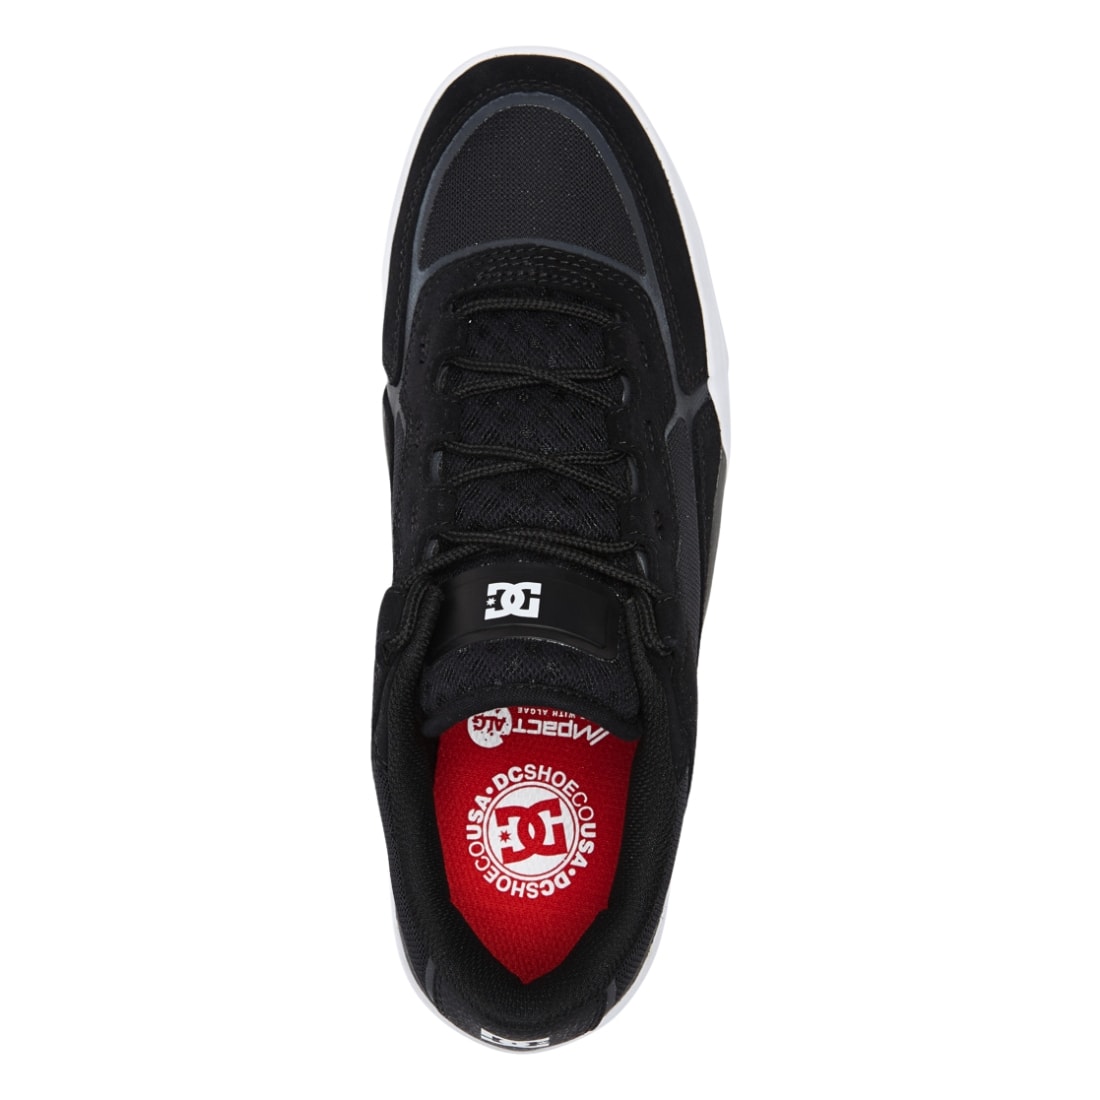 DC Metric S Skate Shoes - Black/Grey - Mens Skate Shoes by DC